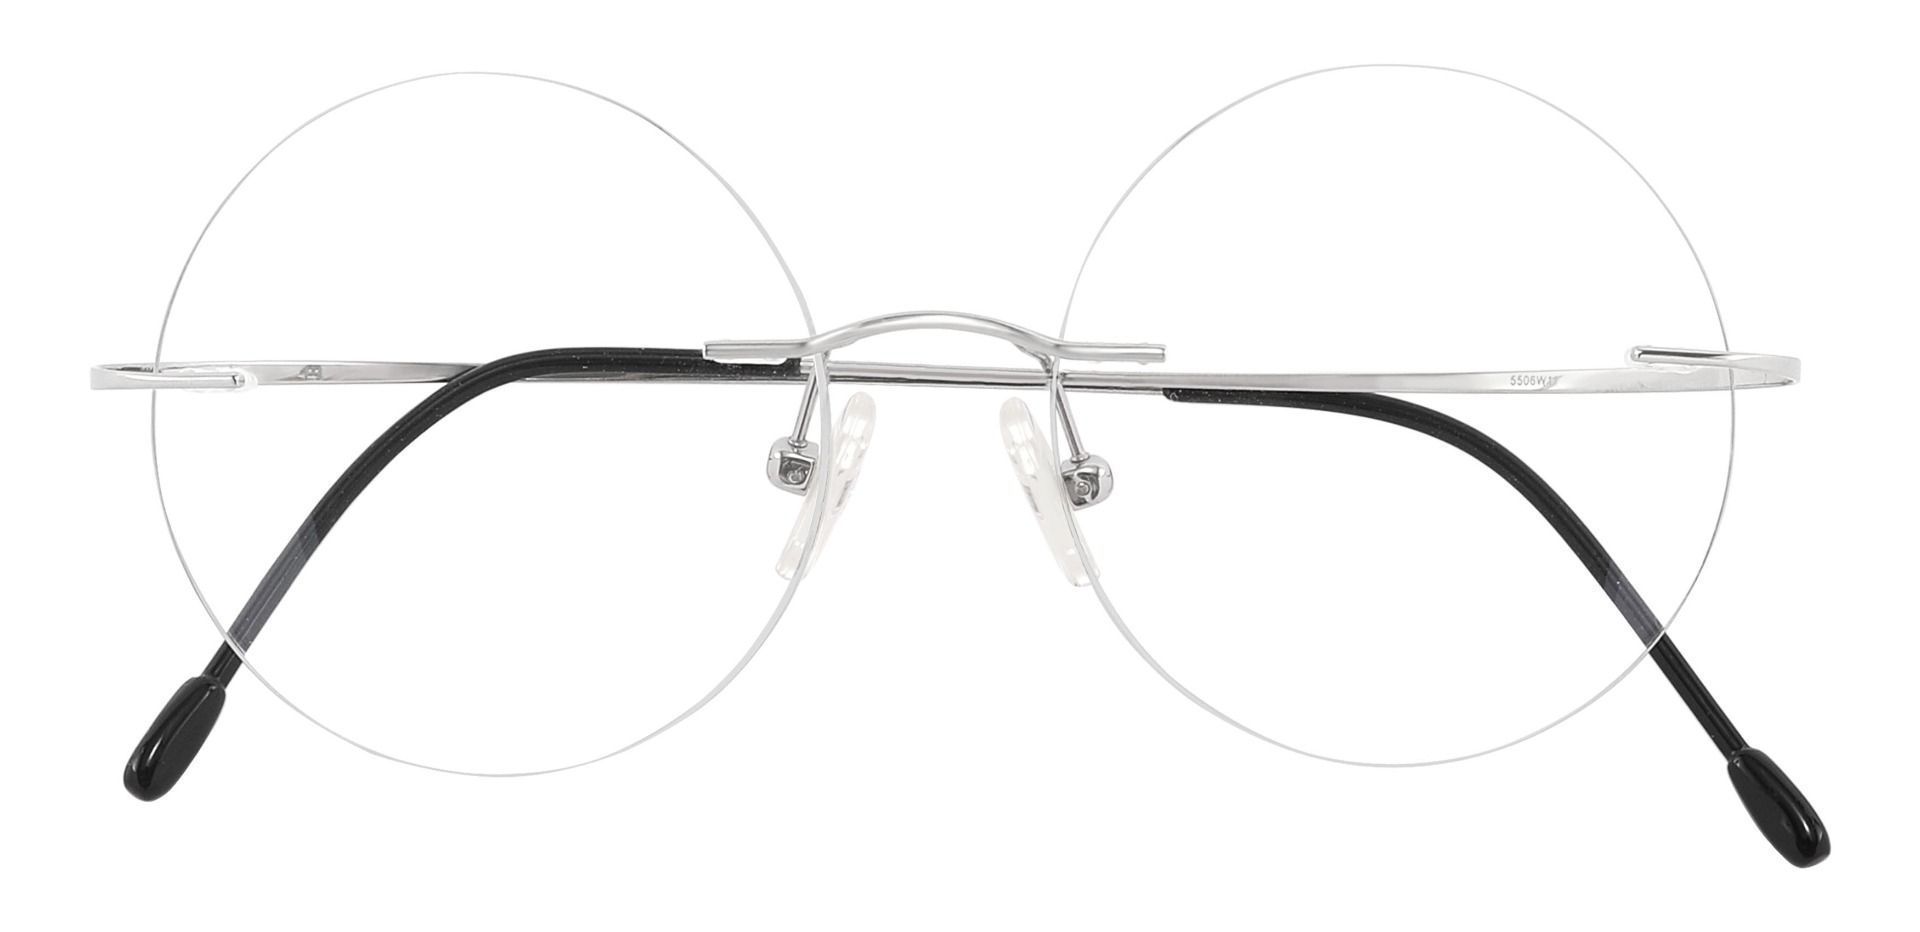 Marengo Rimless Prescription Glasses - Silver | Men's Eyeglasses ...